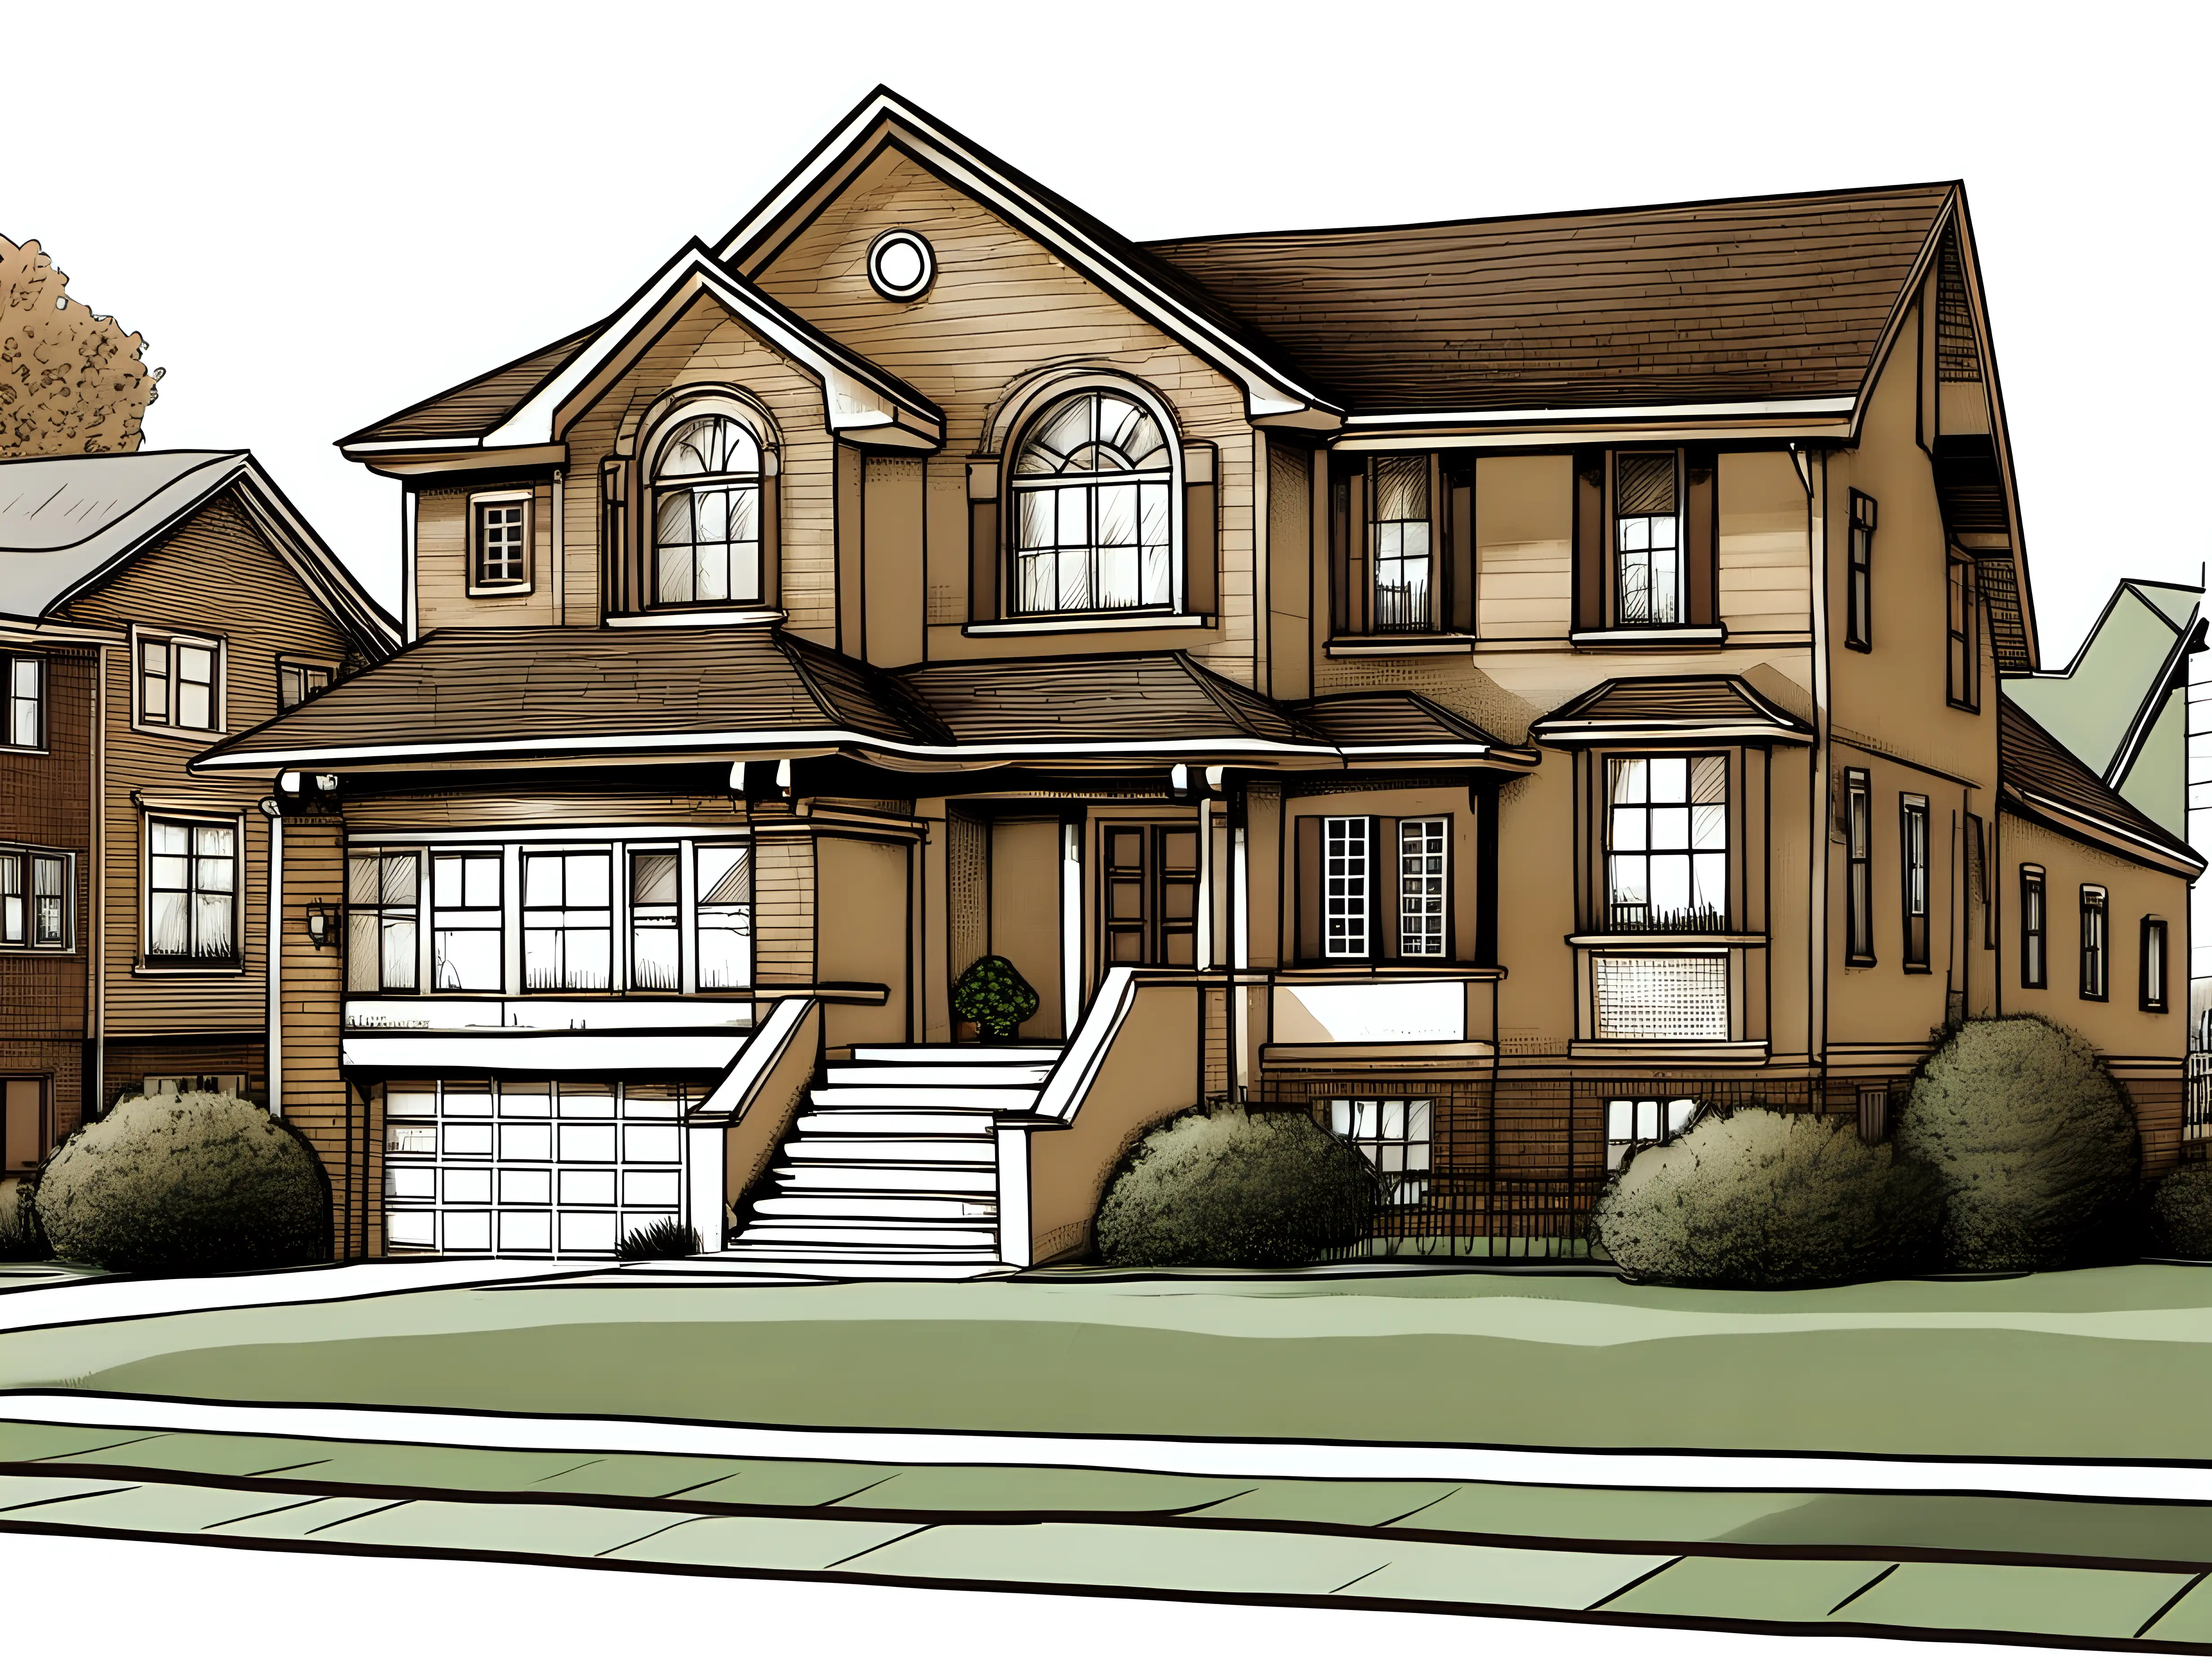 illustration of large brown house in suburban neighborhood